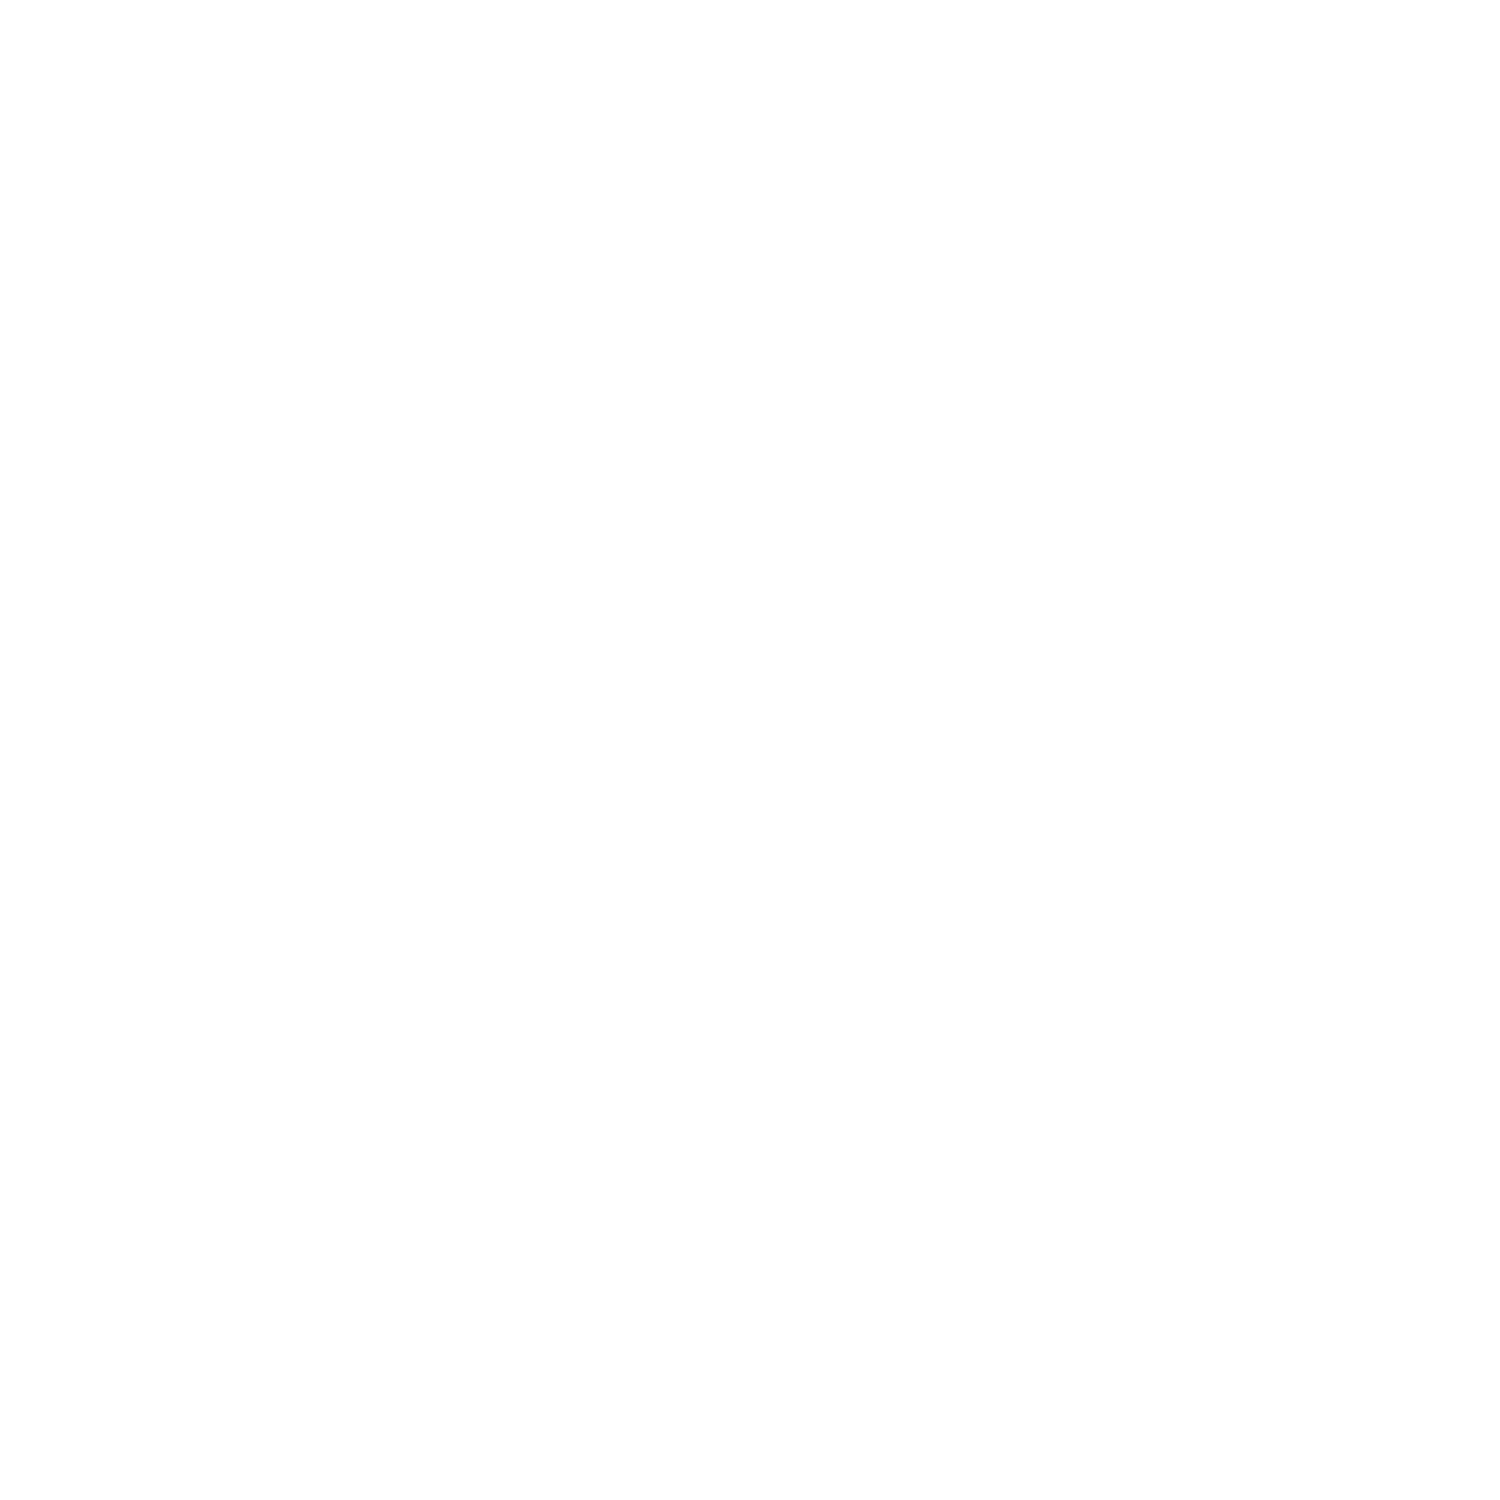 Viktoria River Villa logo valge